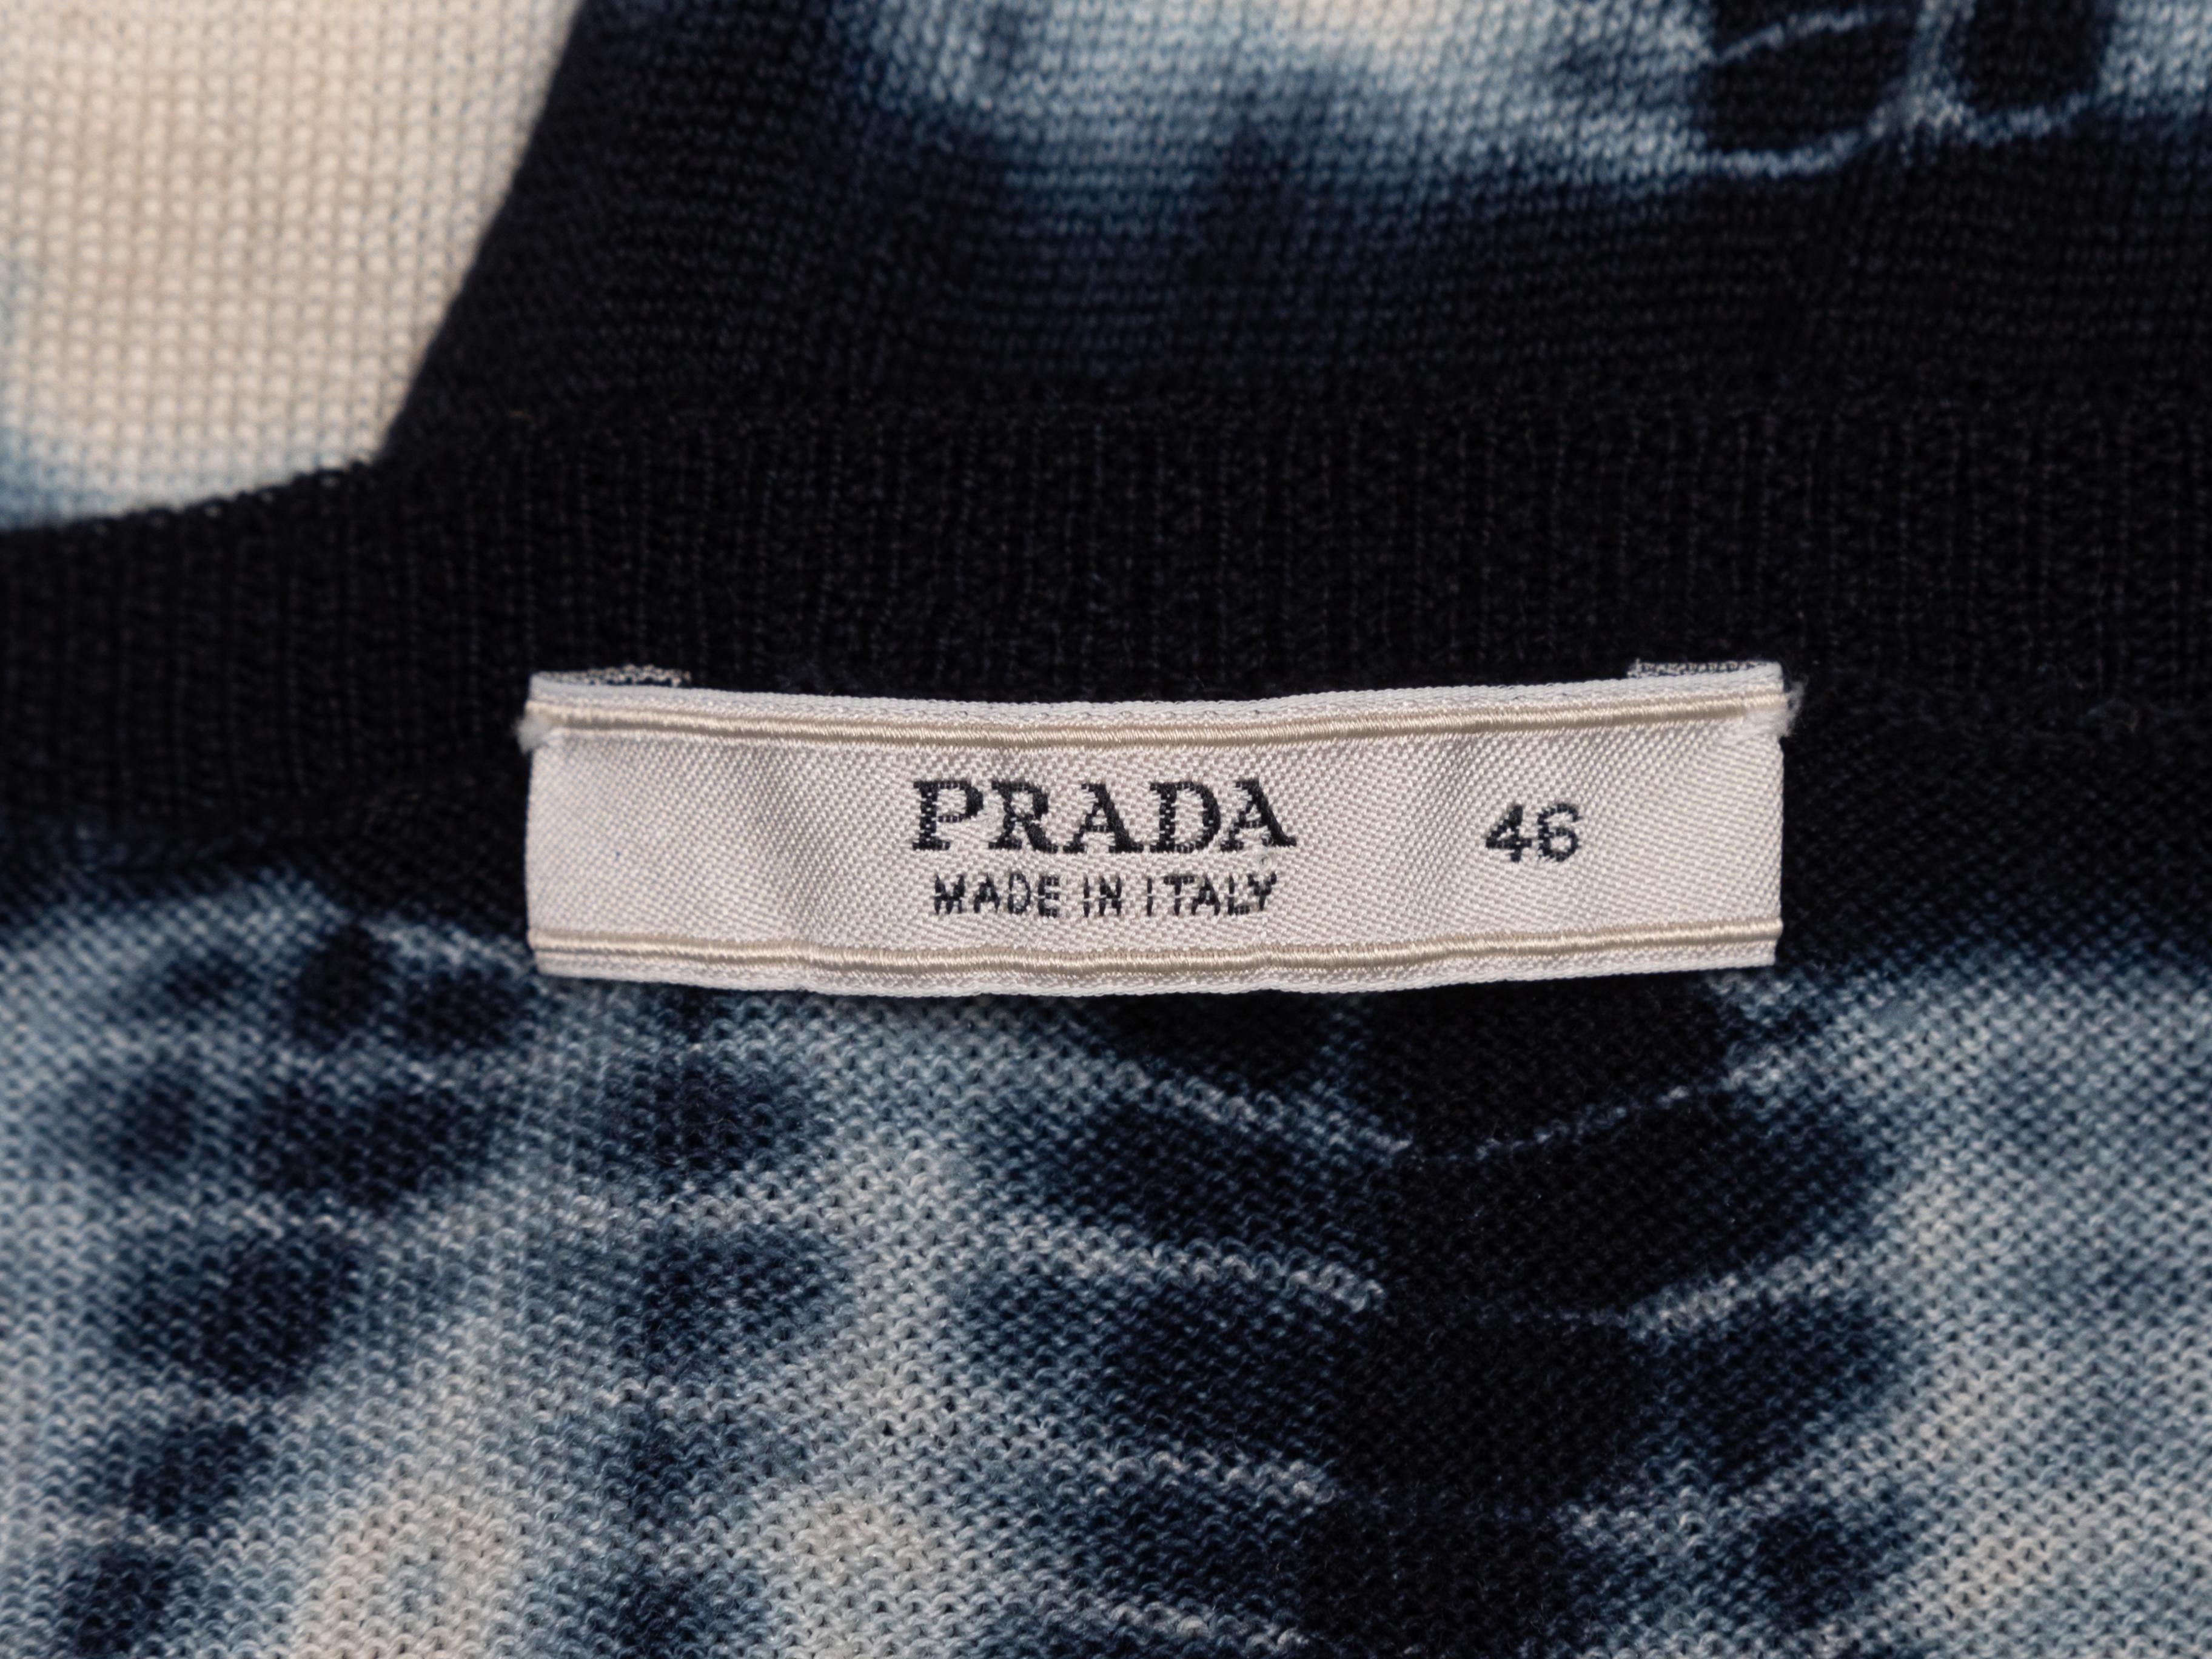 Navy and white tie-dye sweater by Prada. Scoop neck. Designer size 46. 32